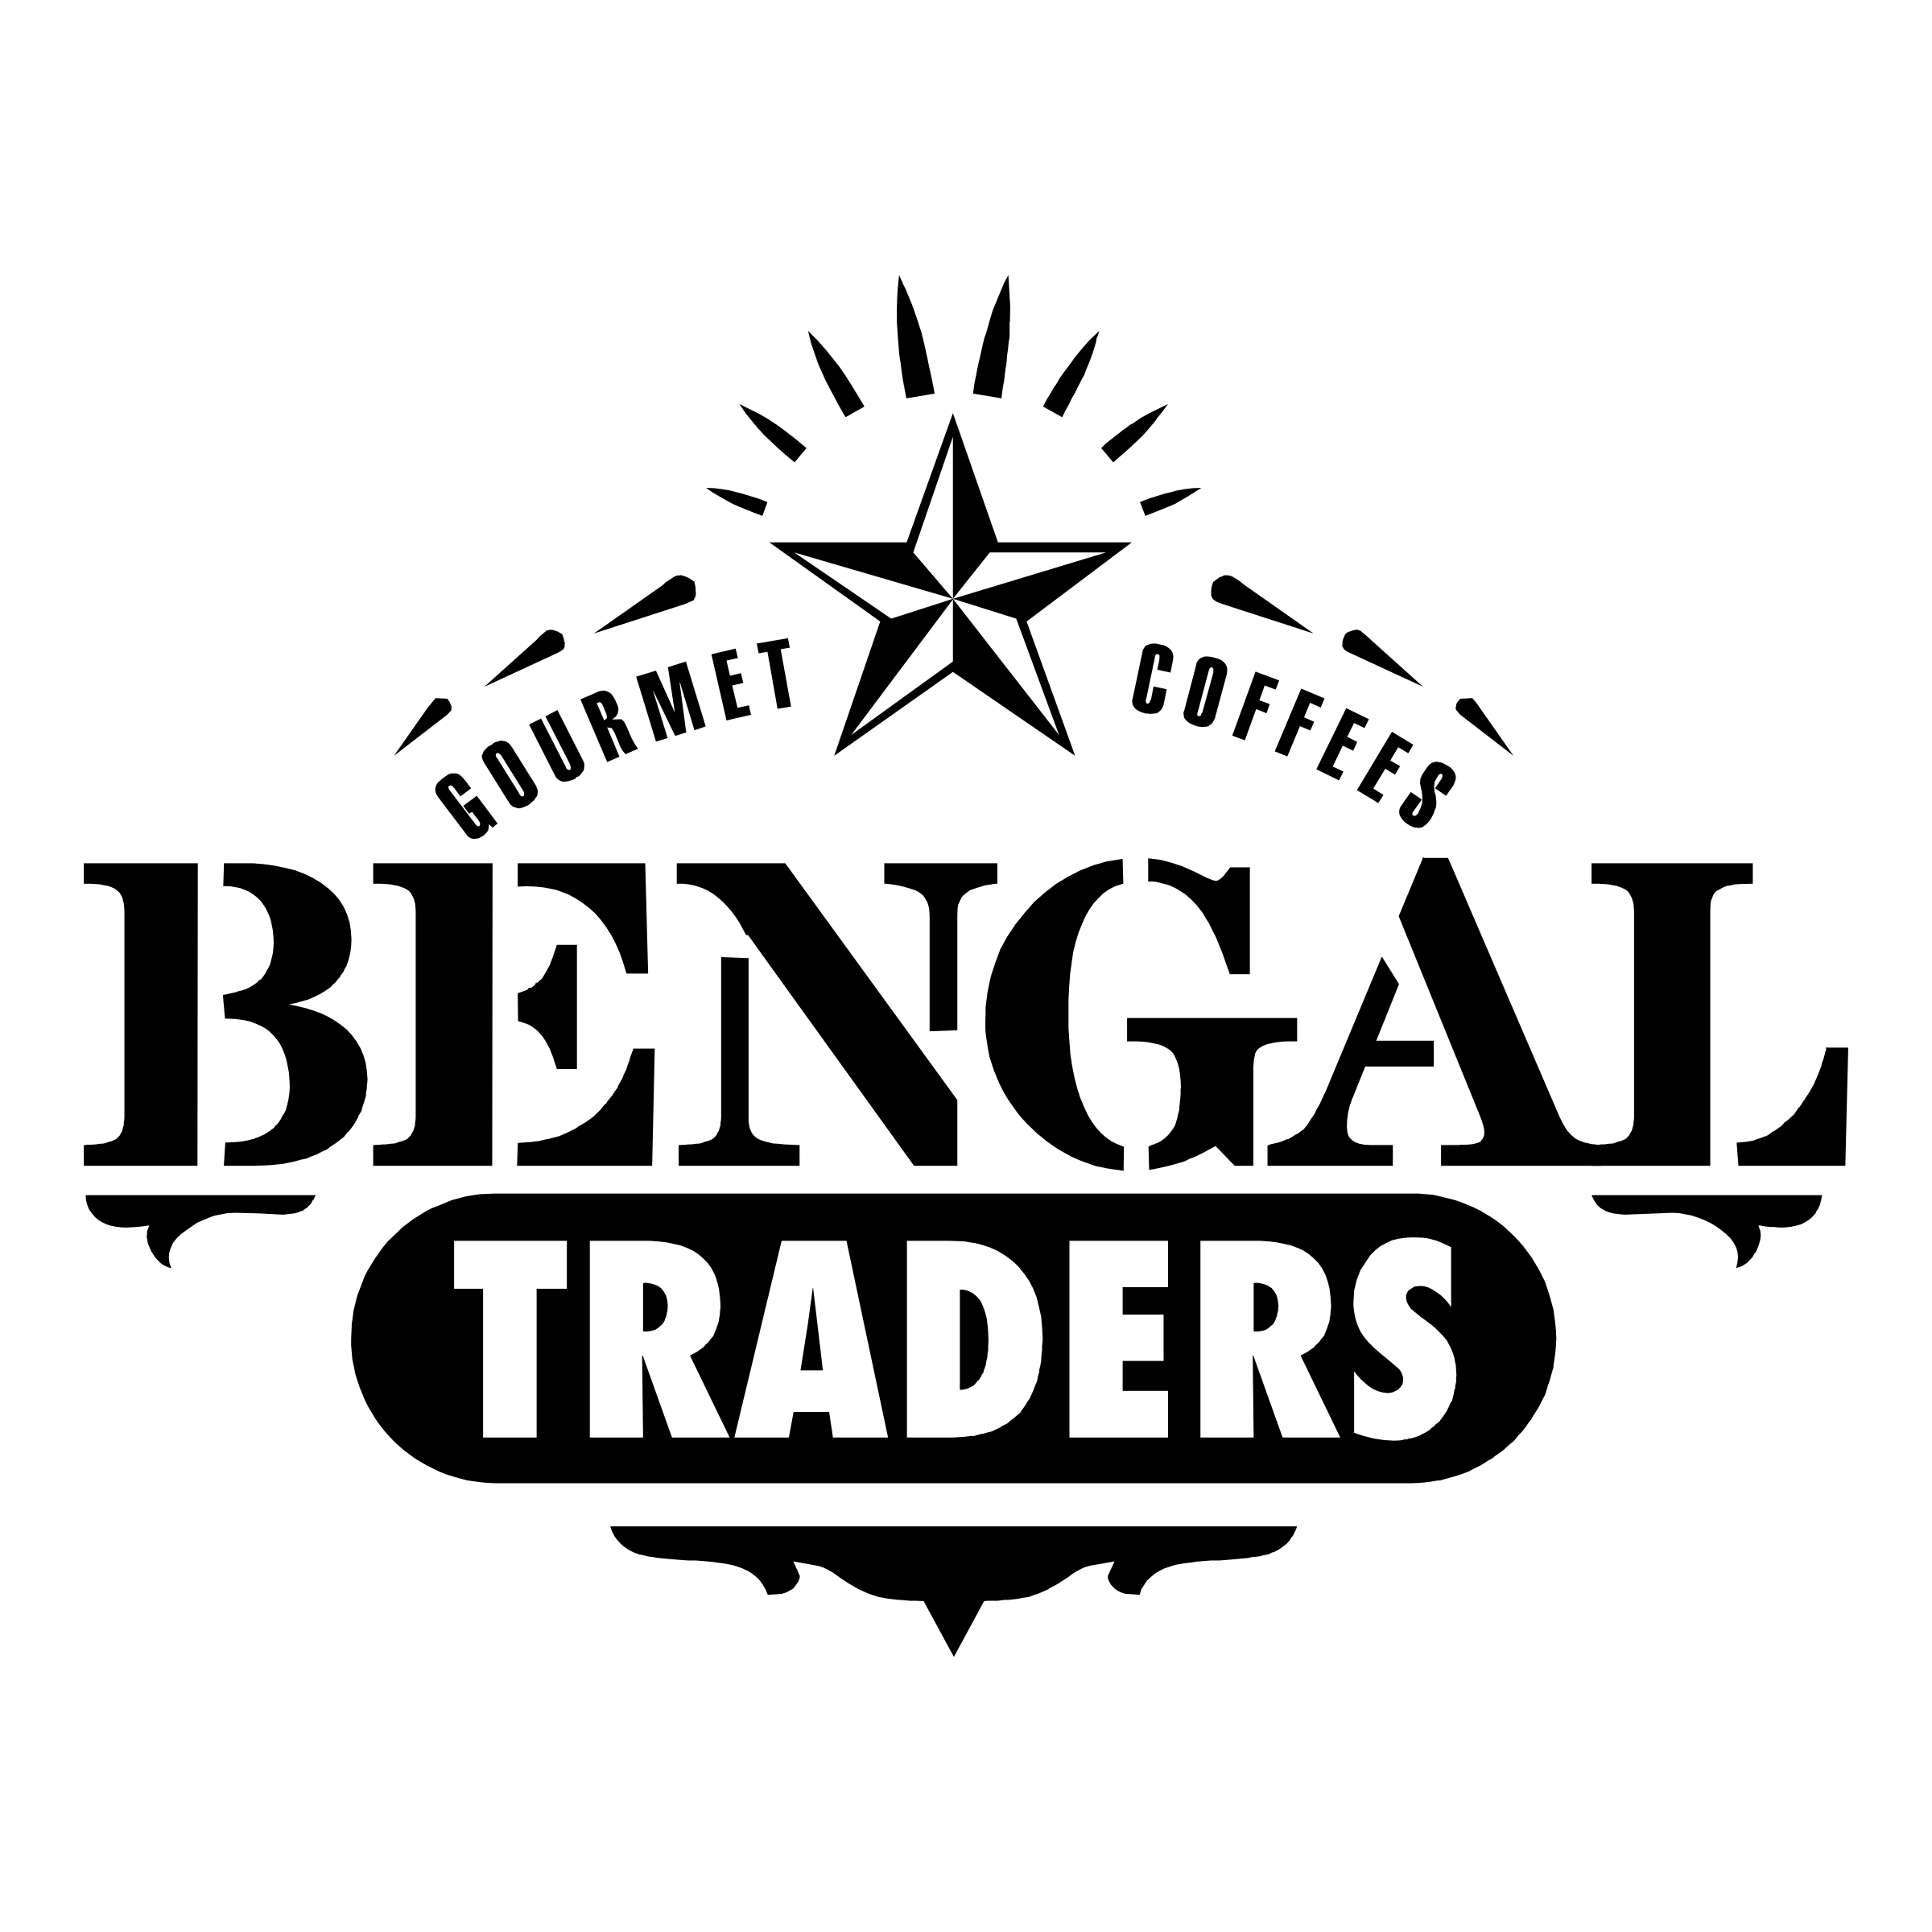 Traders Logo - Bengal Traders Logo PNG Transparent & SVG Vector - Freebie Supply